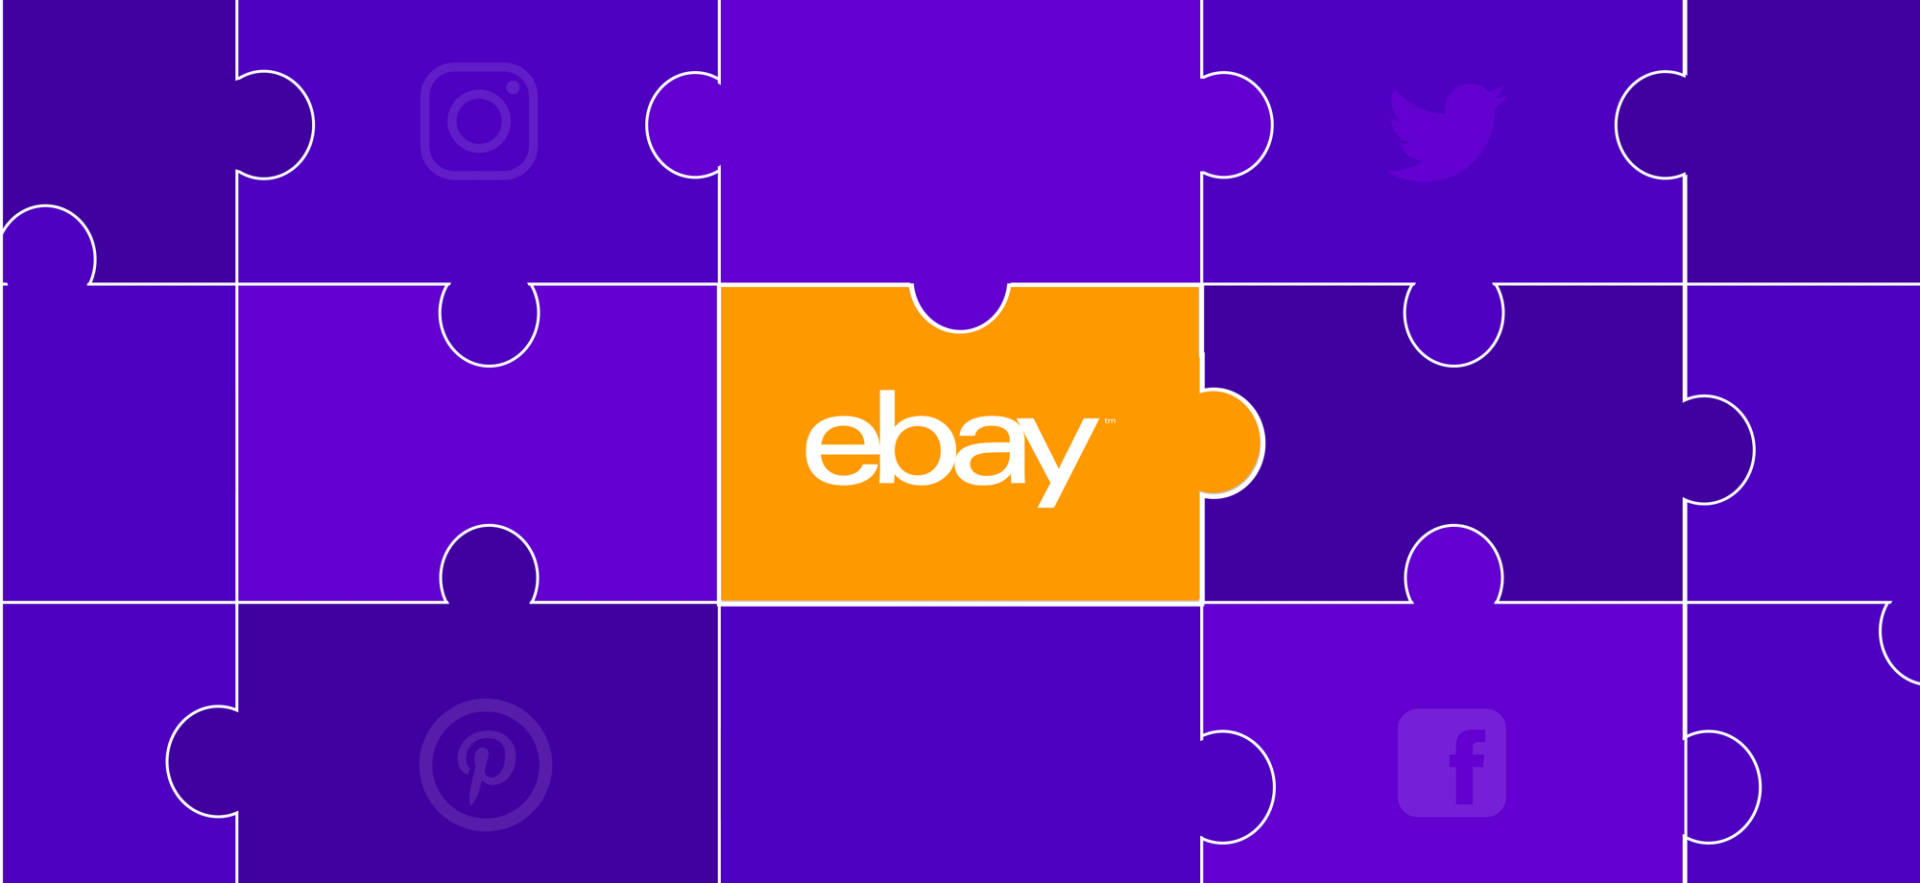 Ebay Purple Puzzle